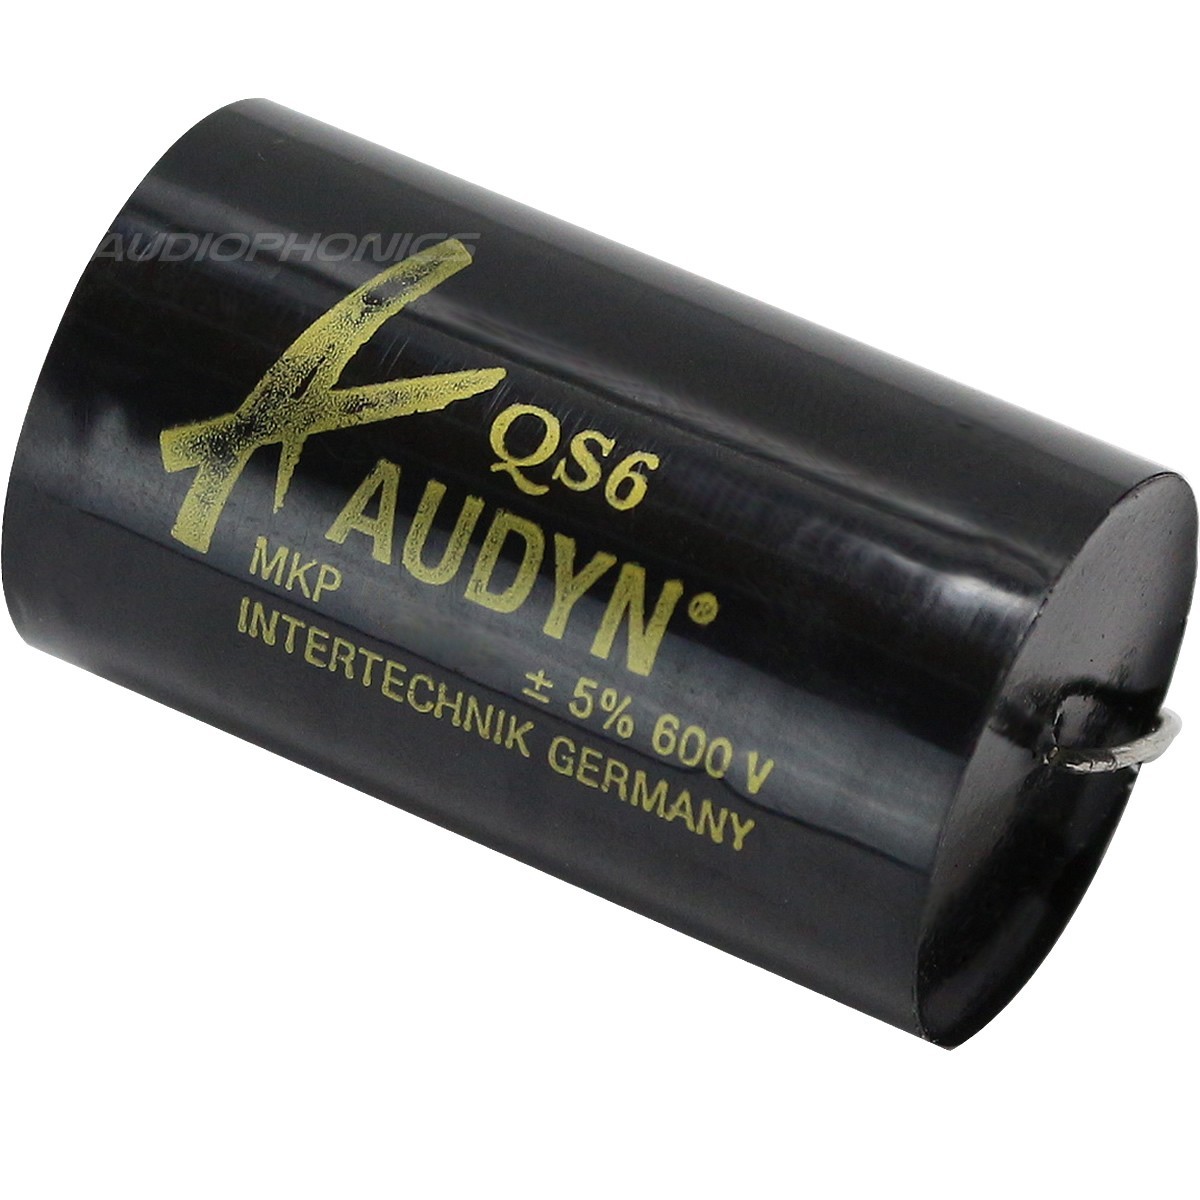 AUDYN CAP QS6 Condensateur MKP 600V 1µF